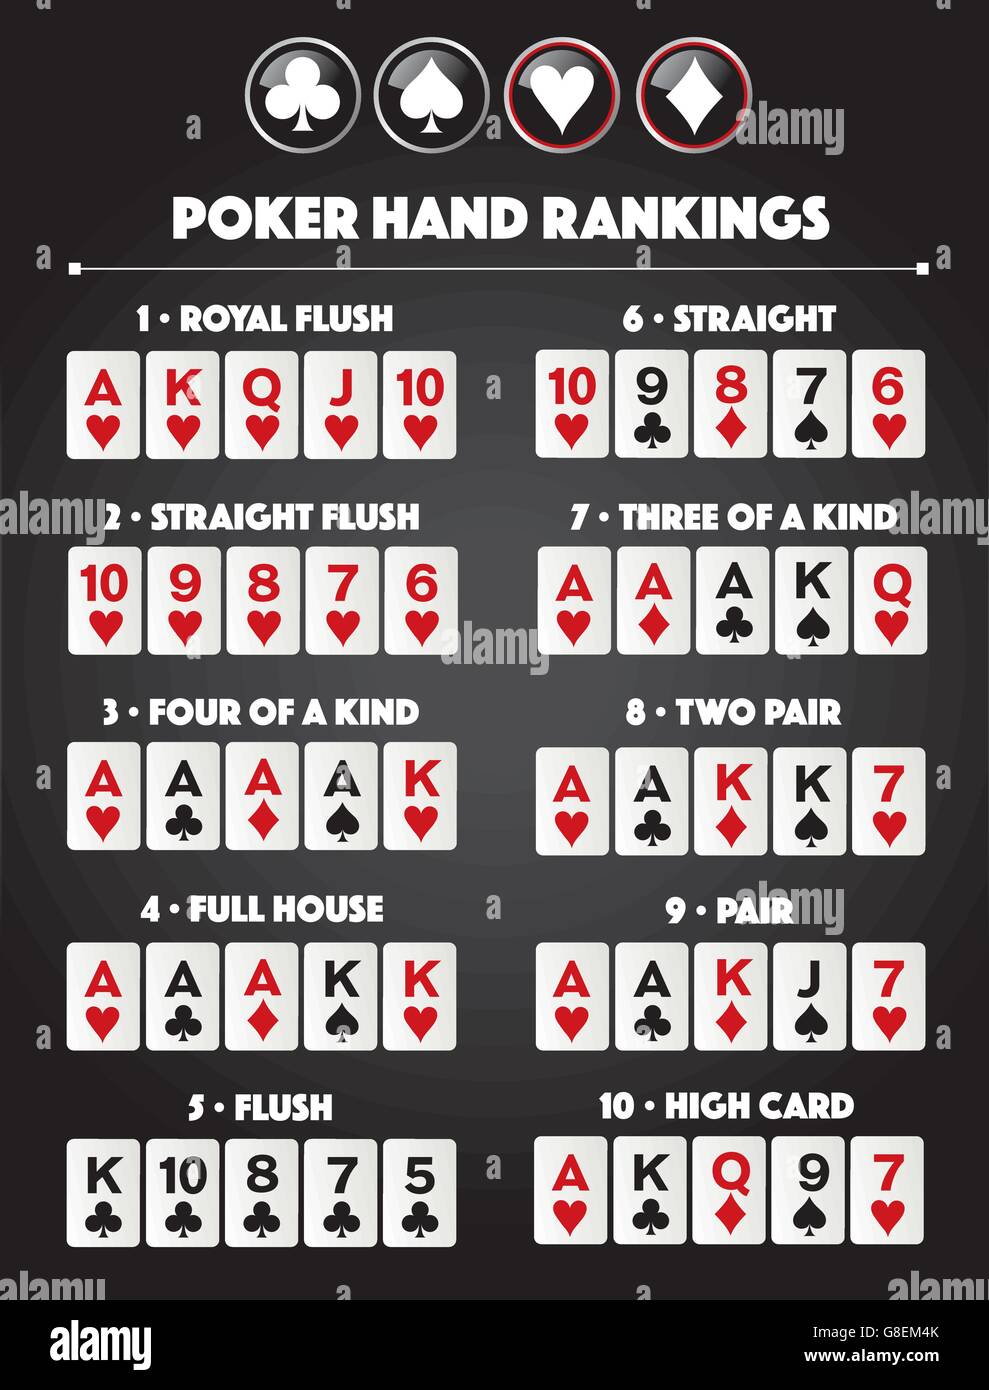 Ranking de manos poker